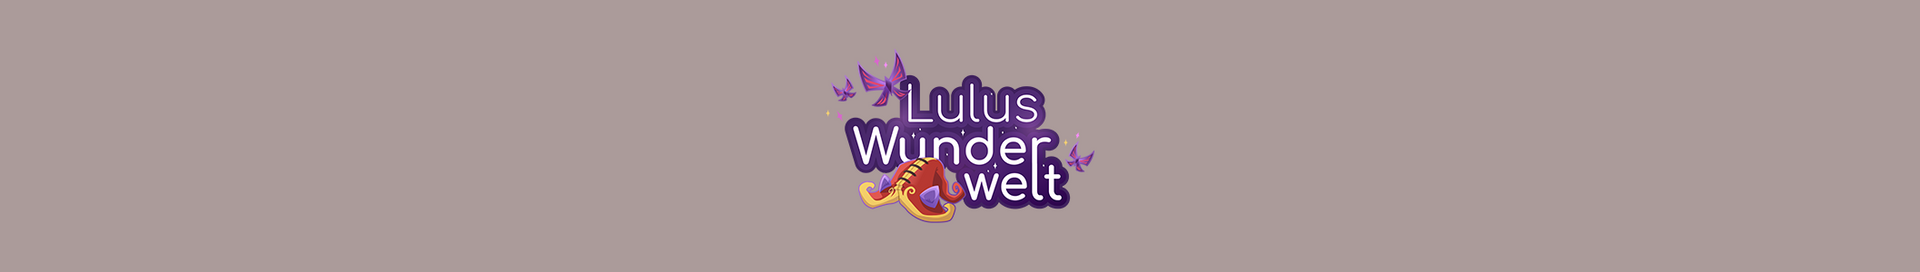 LULUsWunderwelt